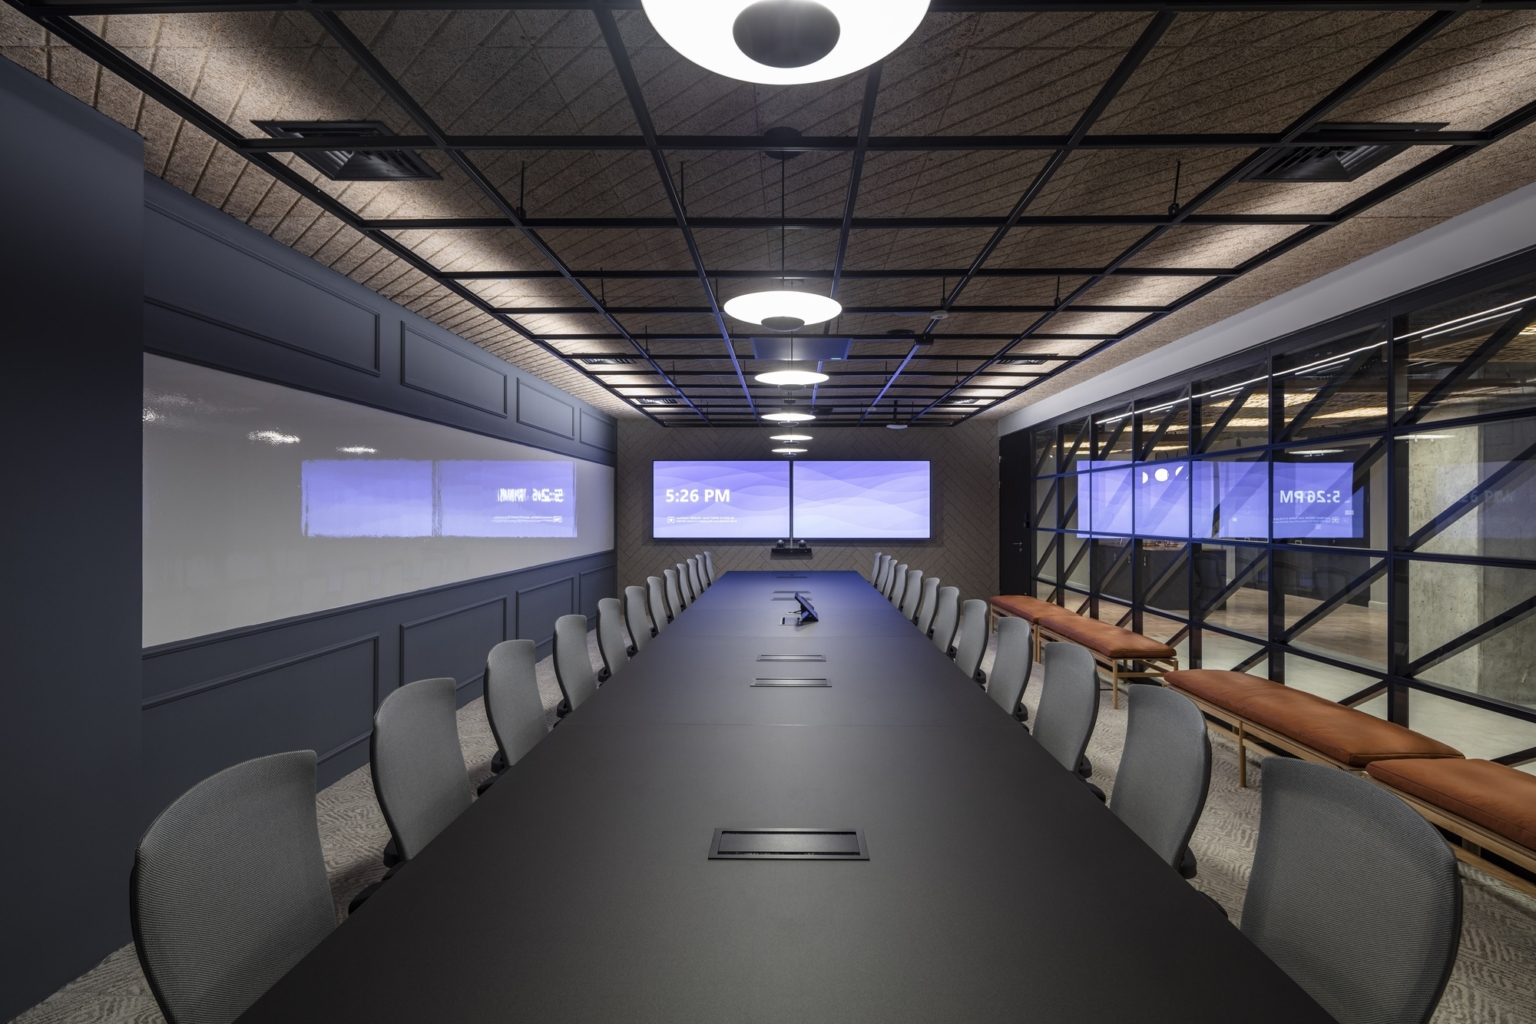 Microsoft(マイクロソフト)のオフィス - イスラエル, ヘルツリーヤの会議室/ミーティングスペース